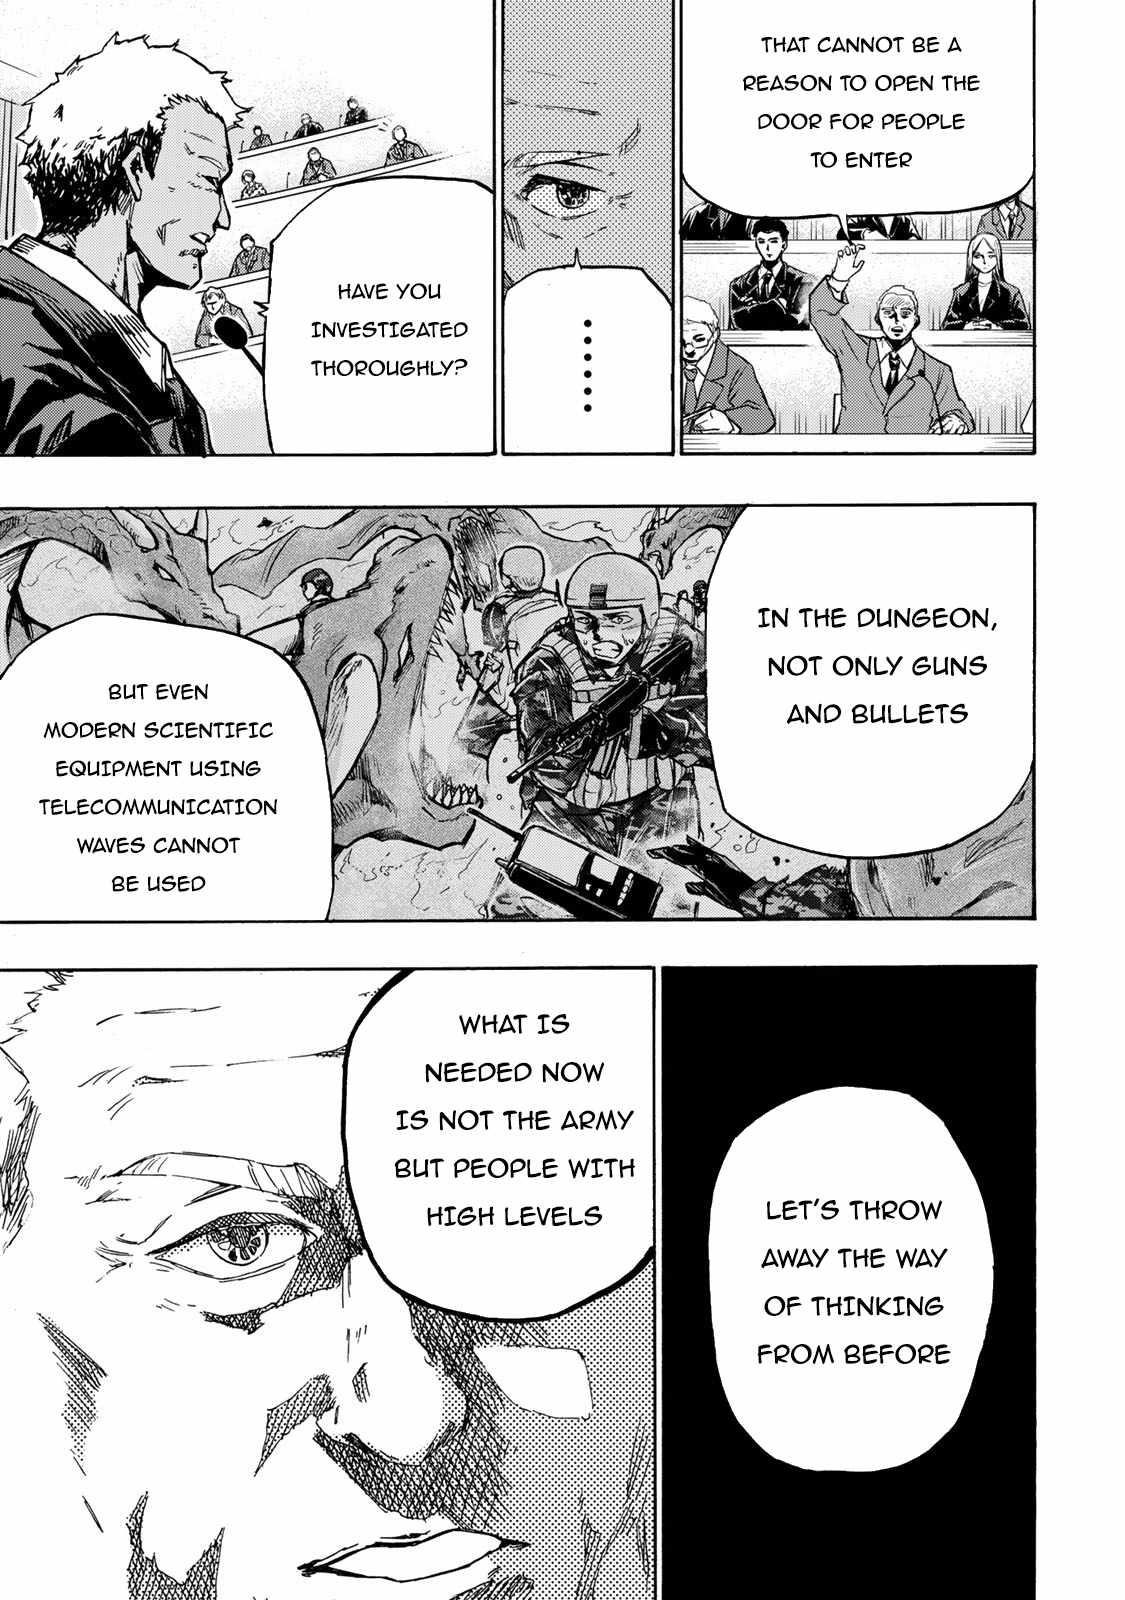 Saikyou de Saisoku no Mugen Level Up Manga Chapter 1